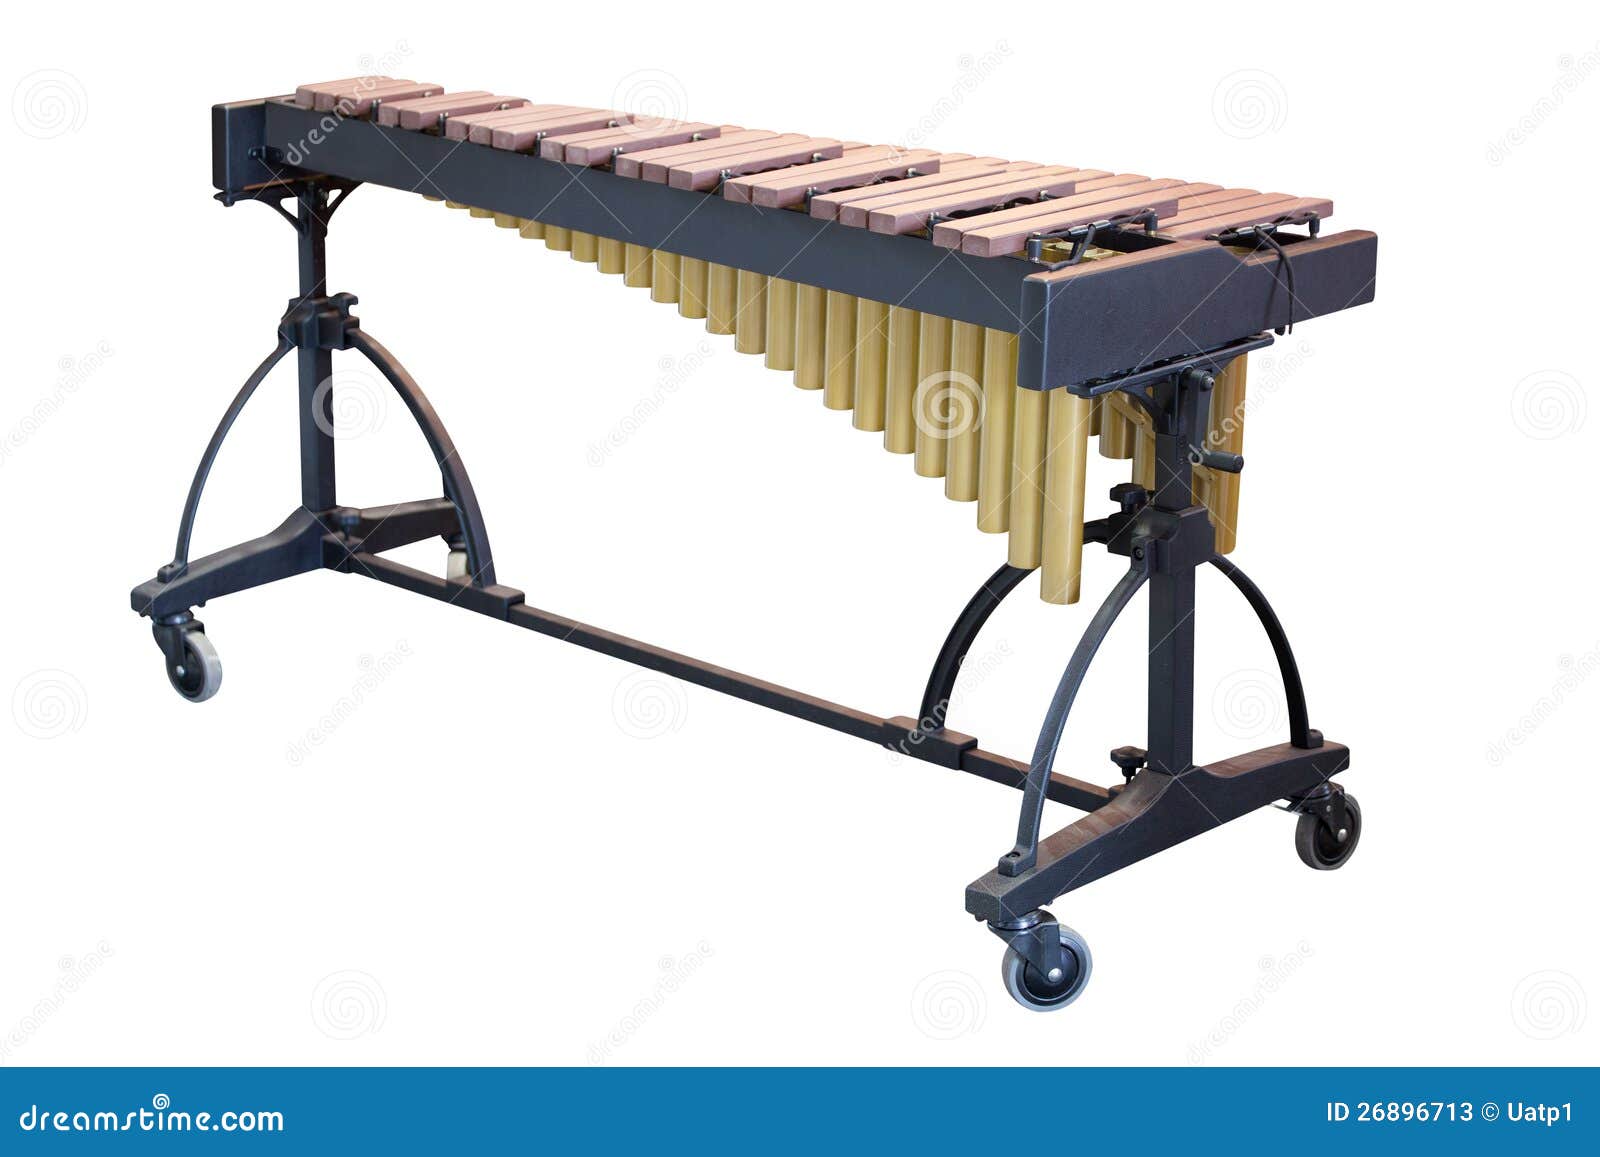 Xylophone stock image. Image of sound, instrument, equipment - 26896713